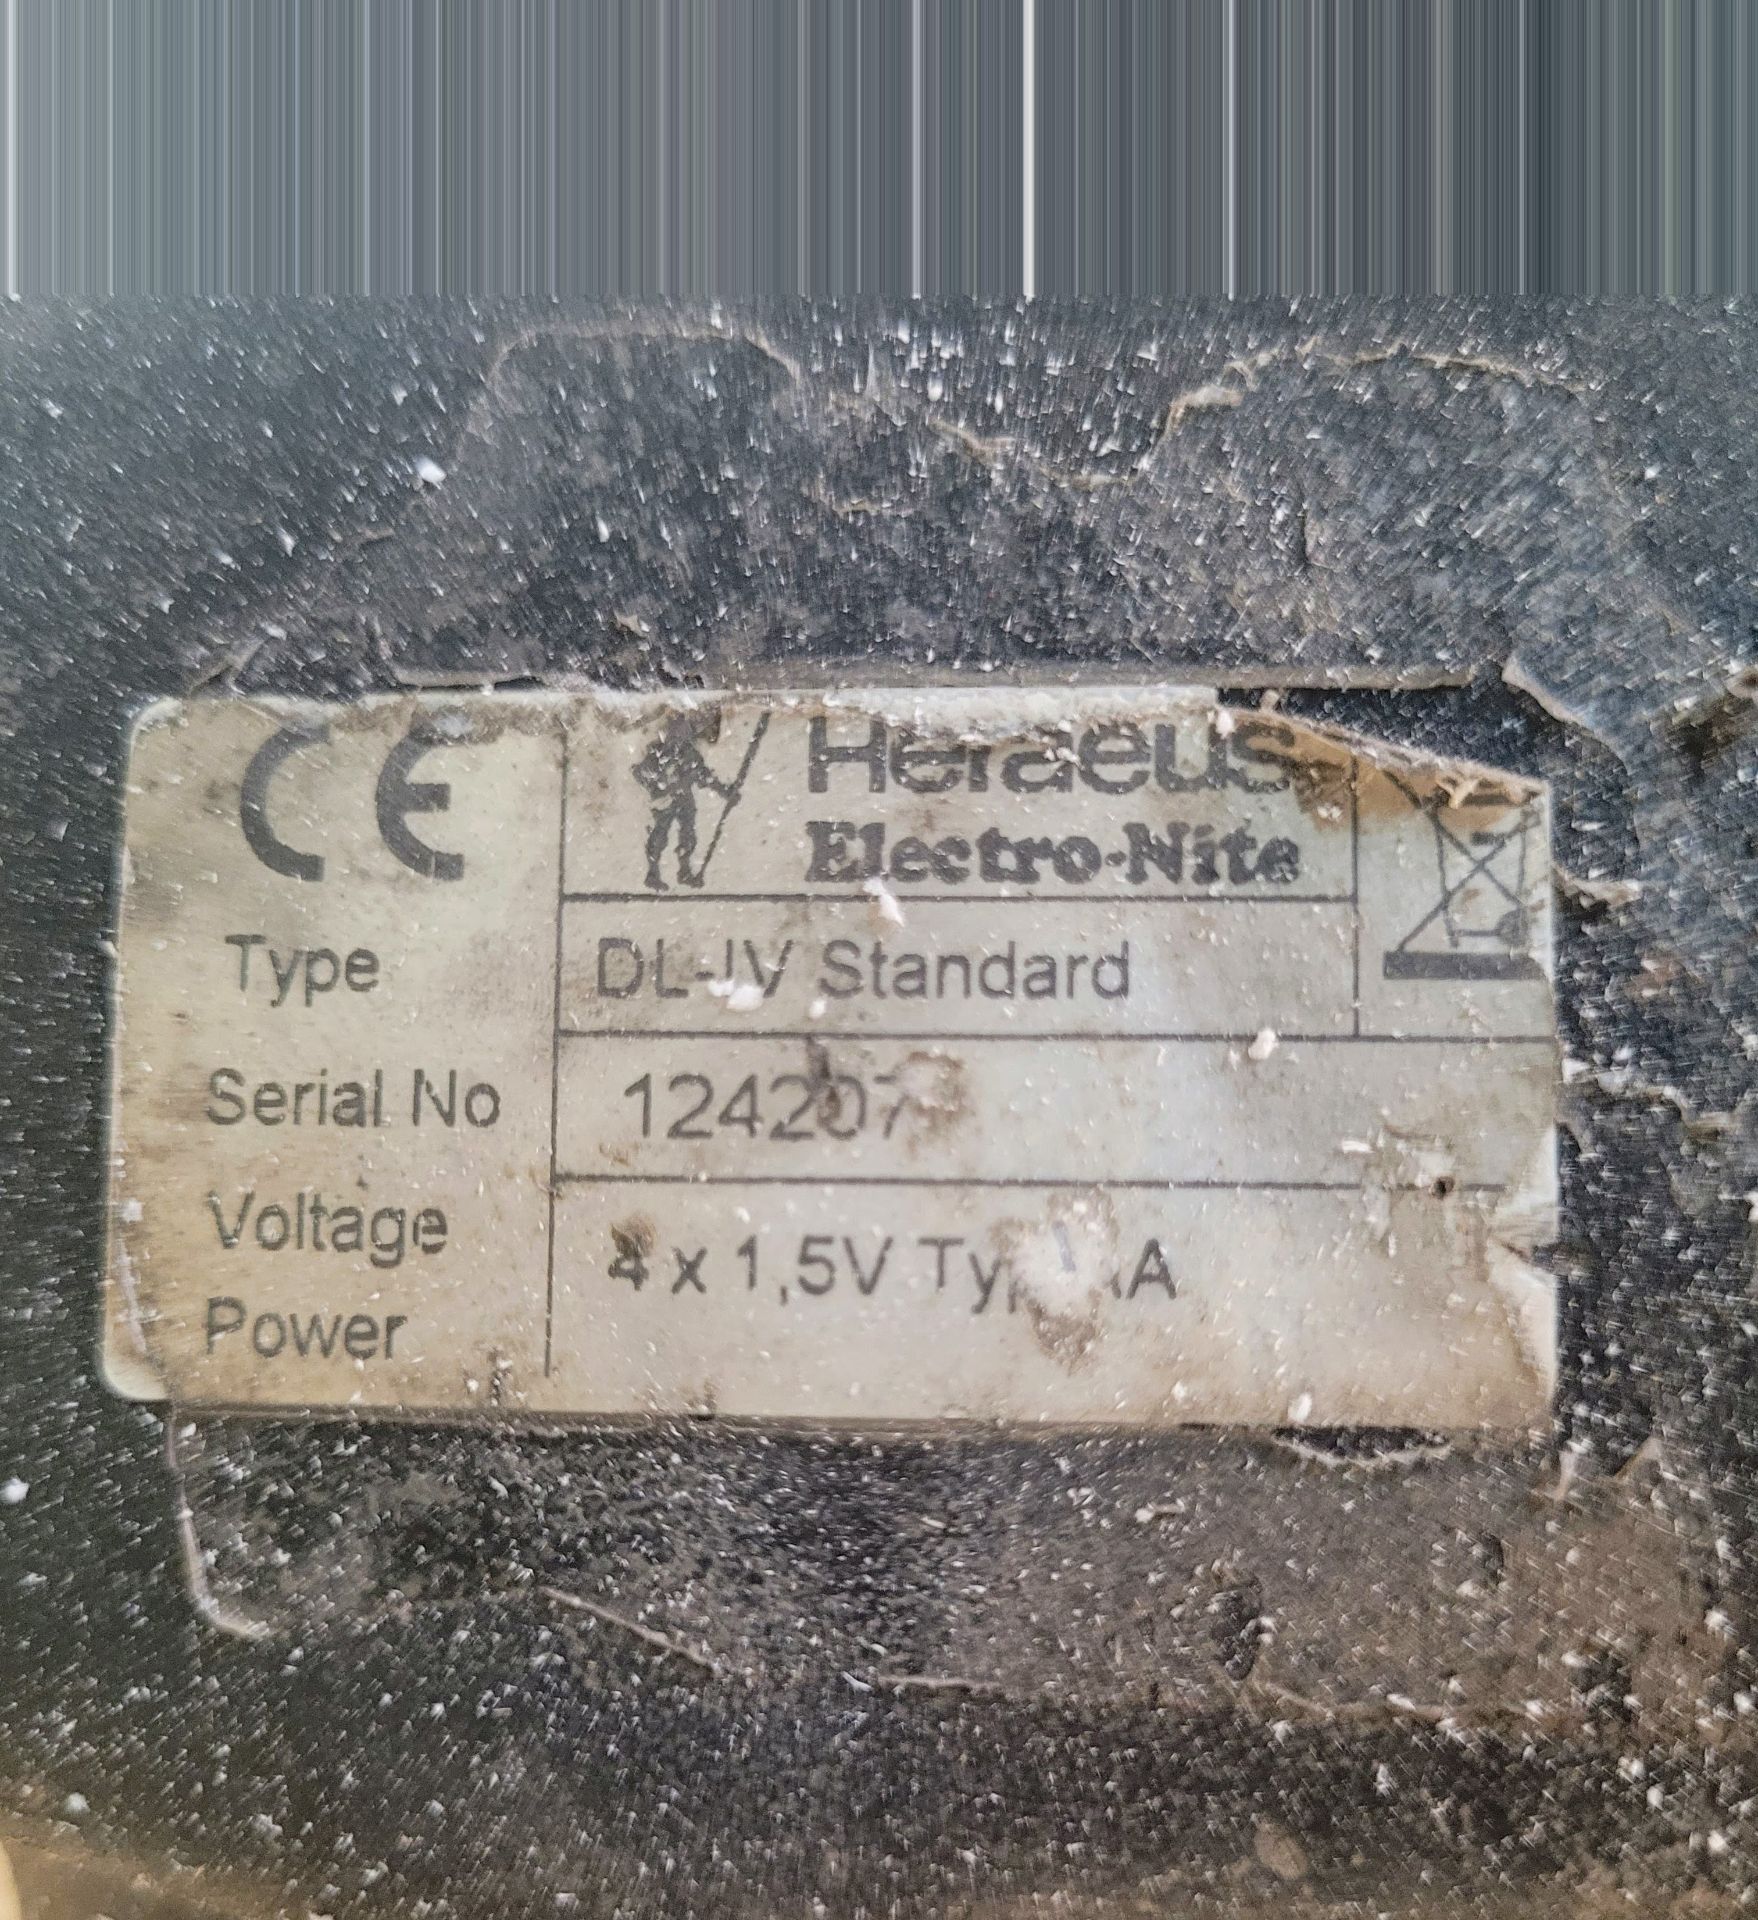 HERAEUS TYPE DL-1V STANDARD ELECTRO-MITE TEMPERATURE READER, S/N: 124207 W/ (25) XT3 SLEEVES - Image 4 of 4